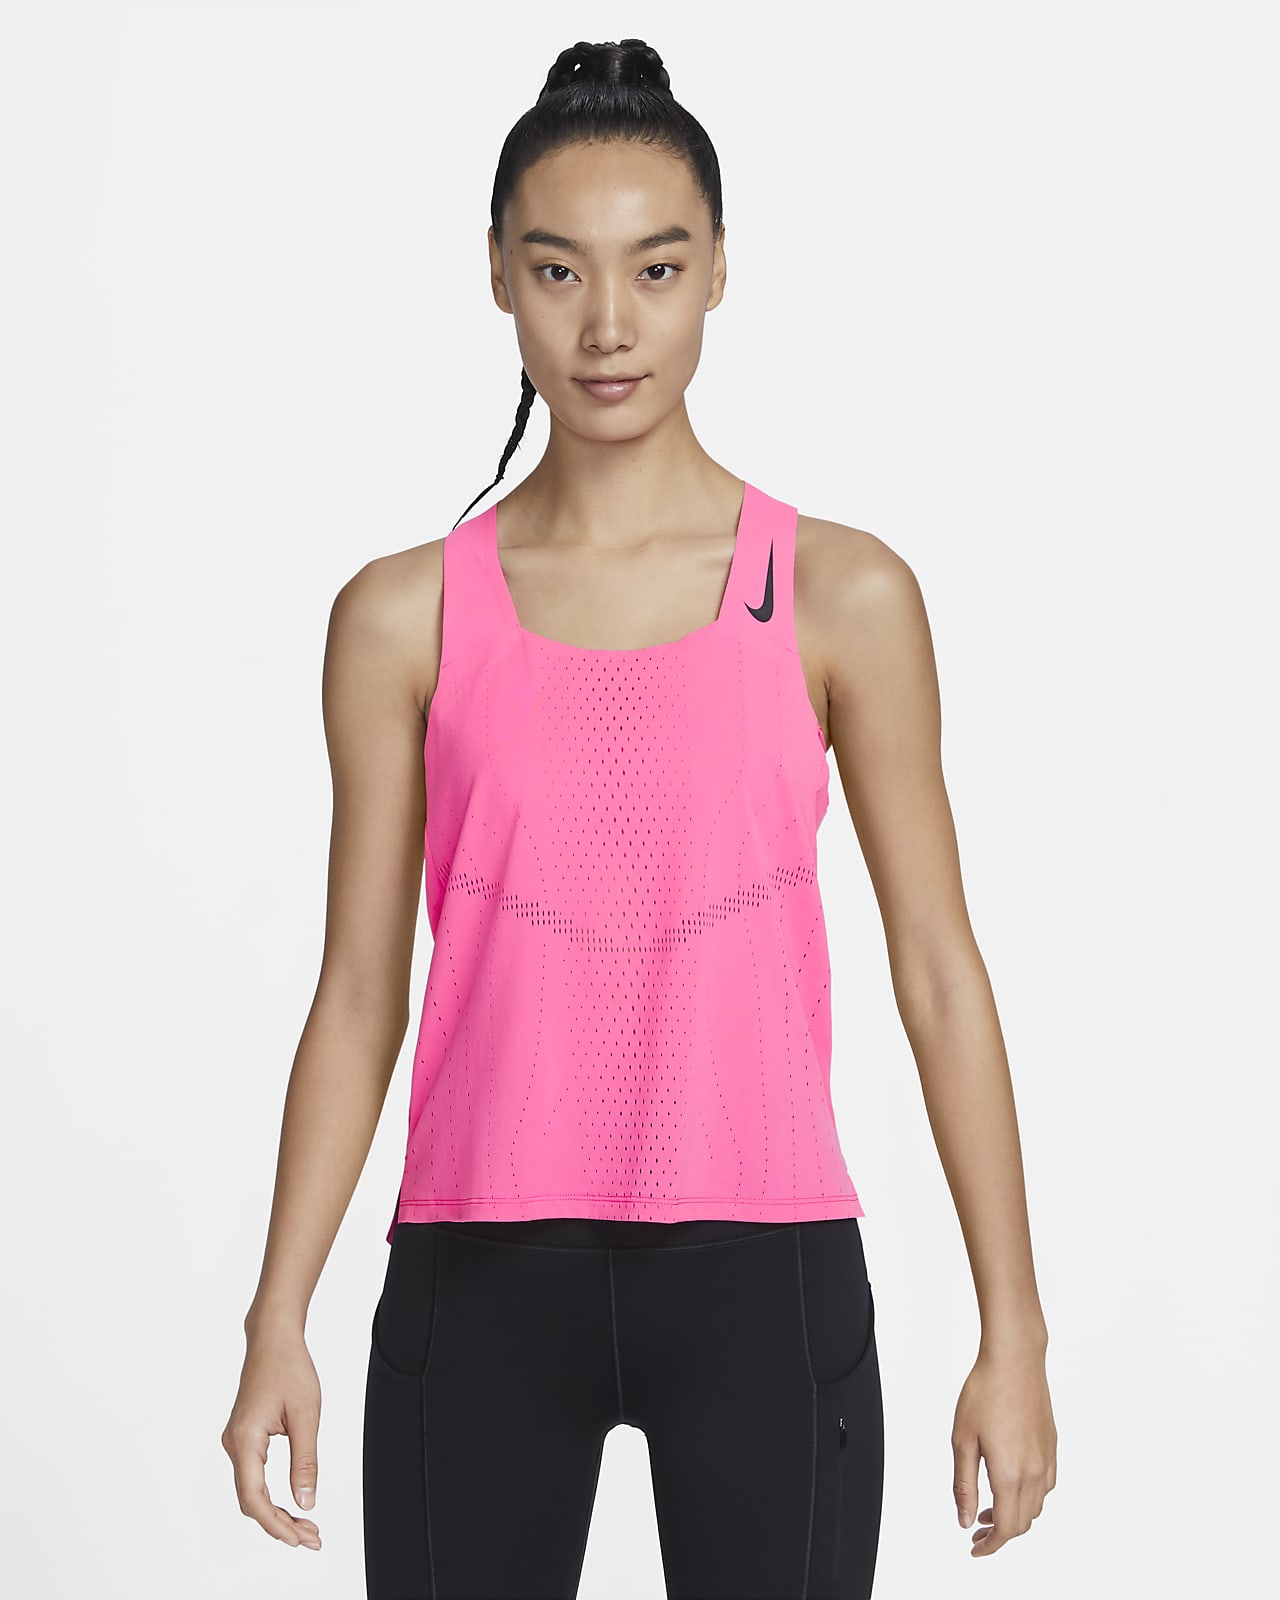 Nike Dri-FIT ADV AeroSwift Women's Racing Vest